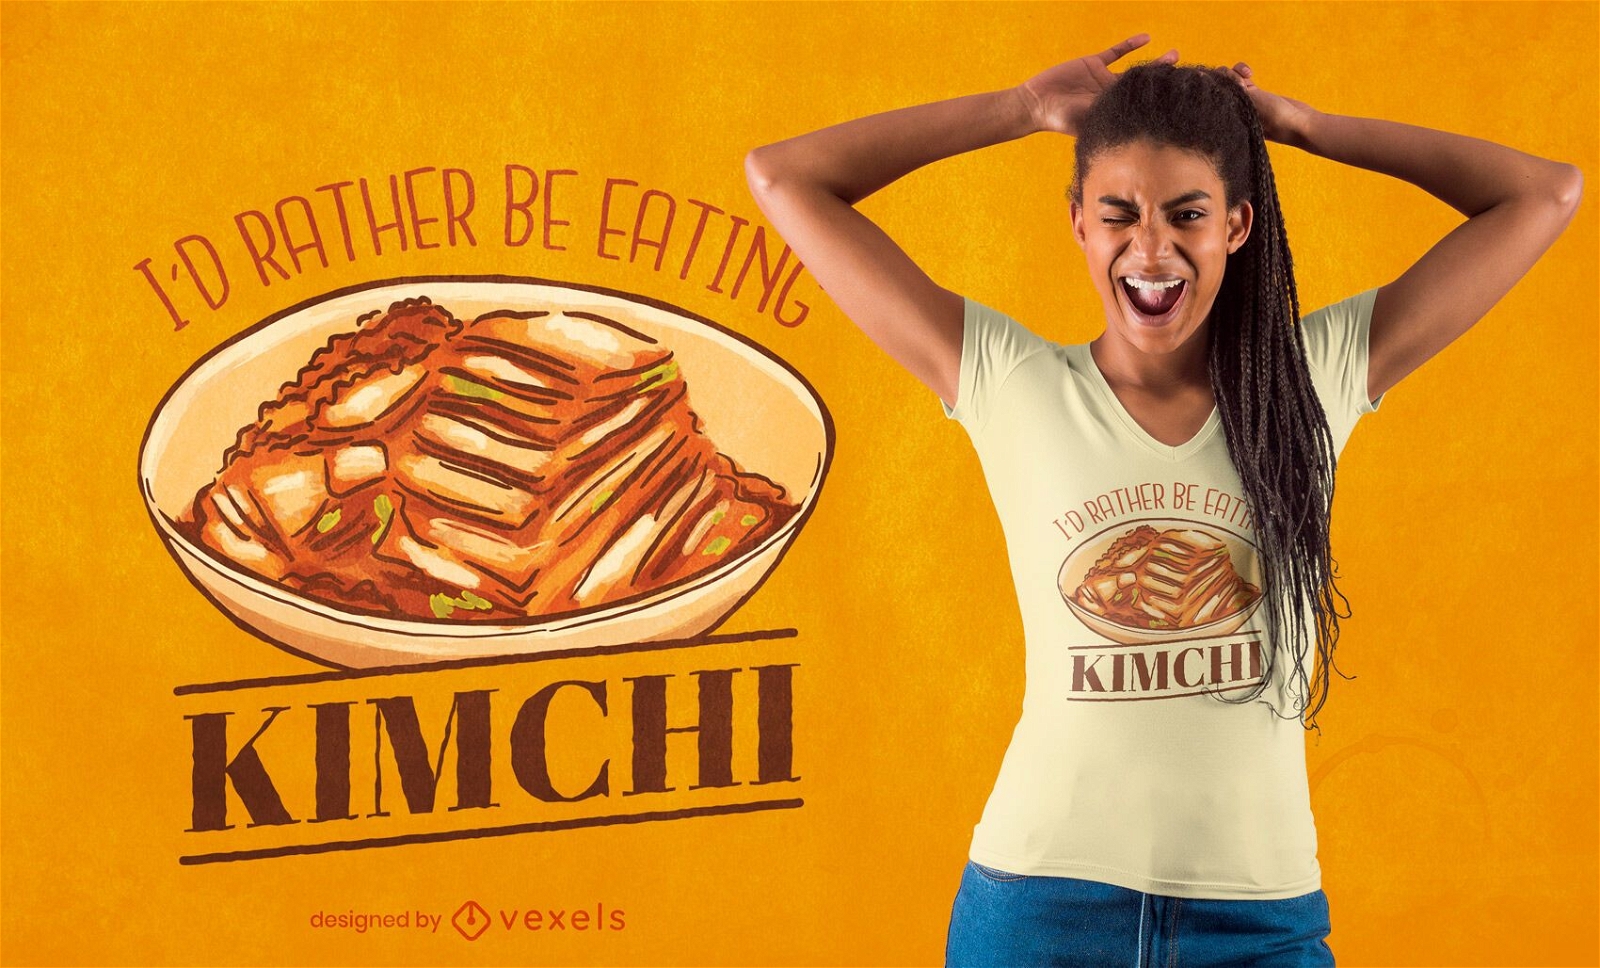 Kimchi quote t-shirt design